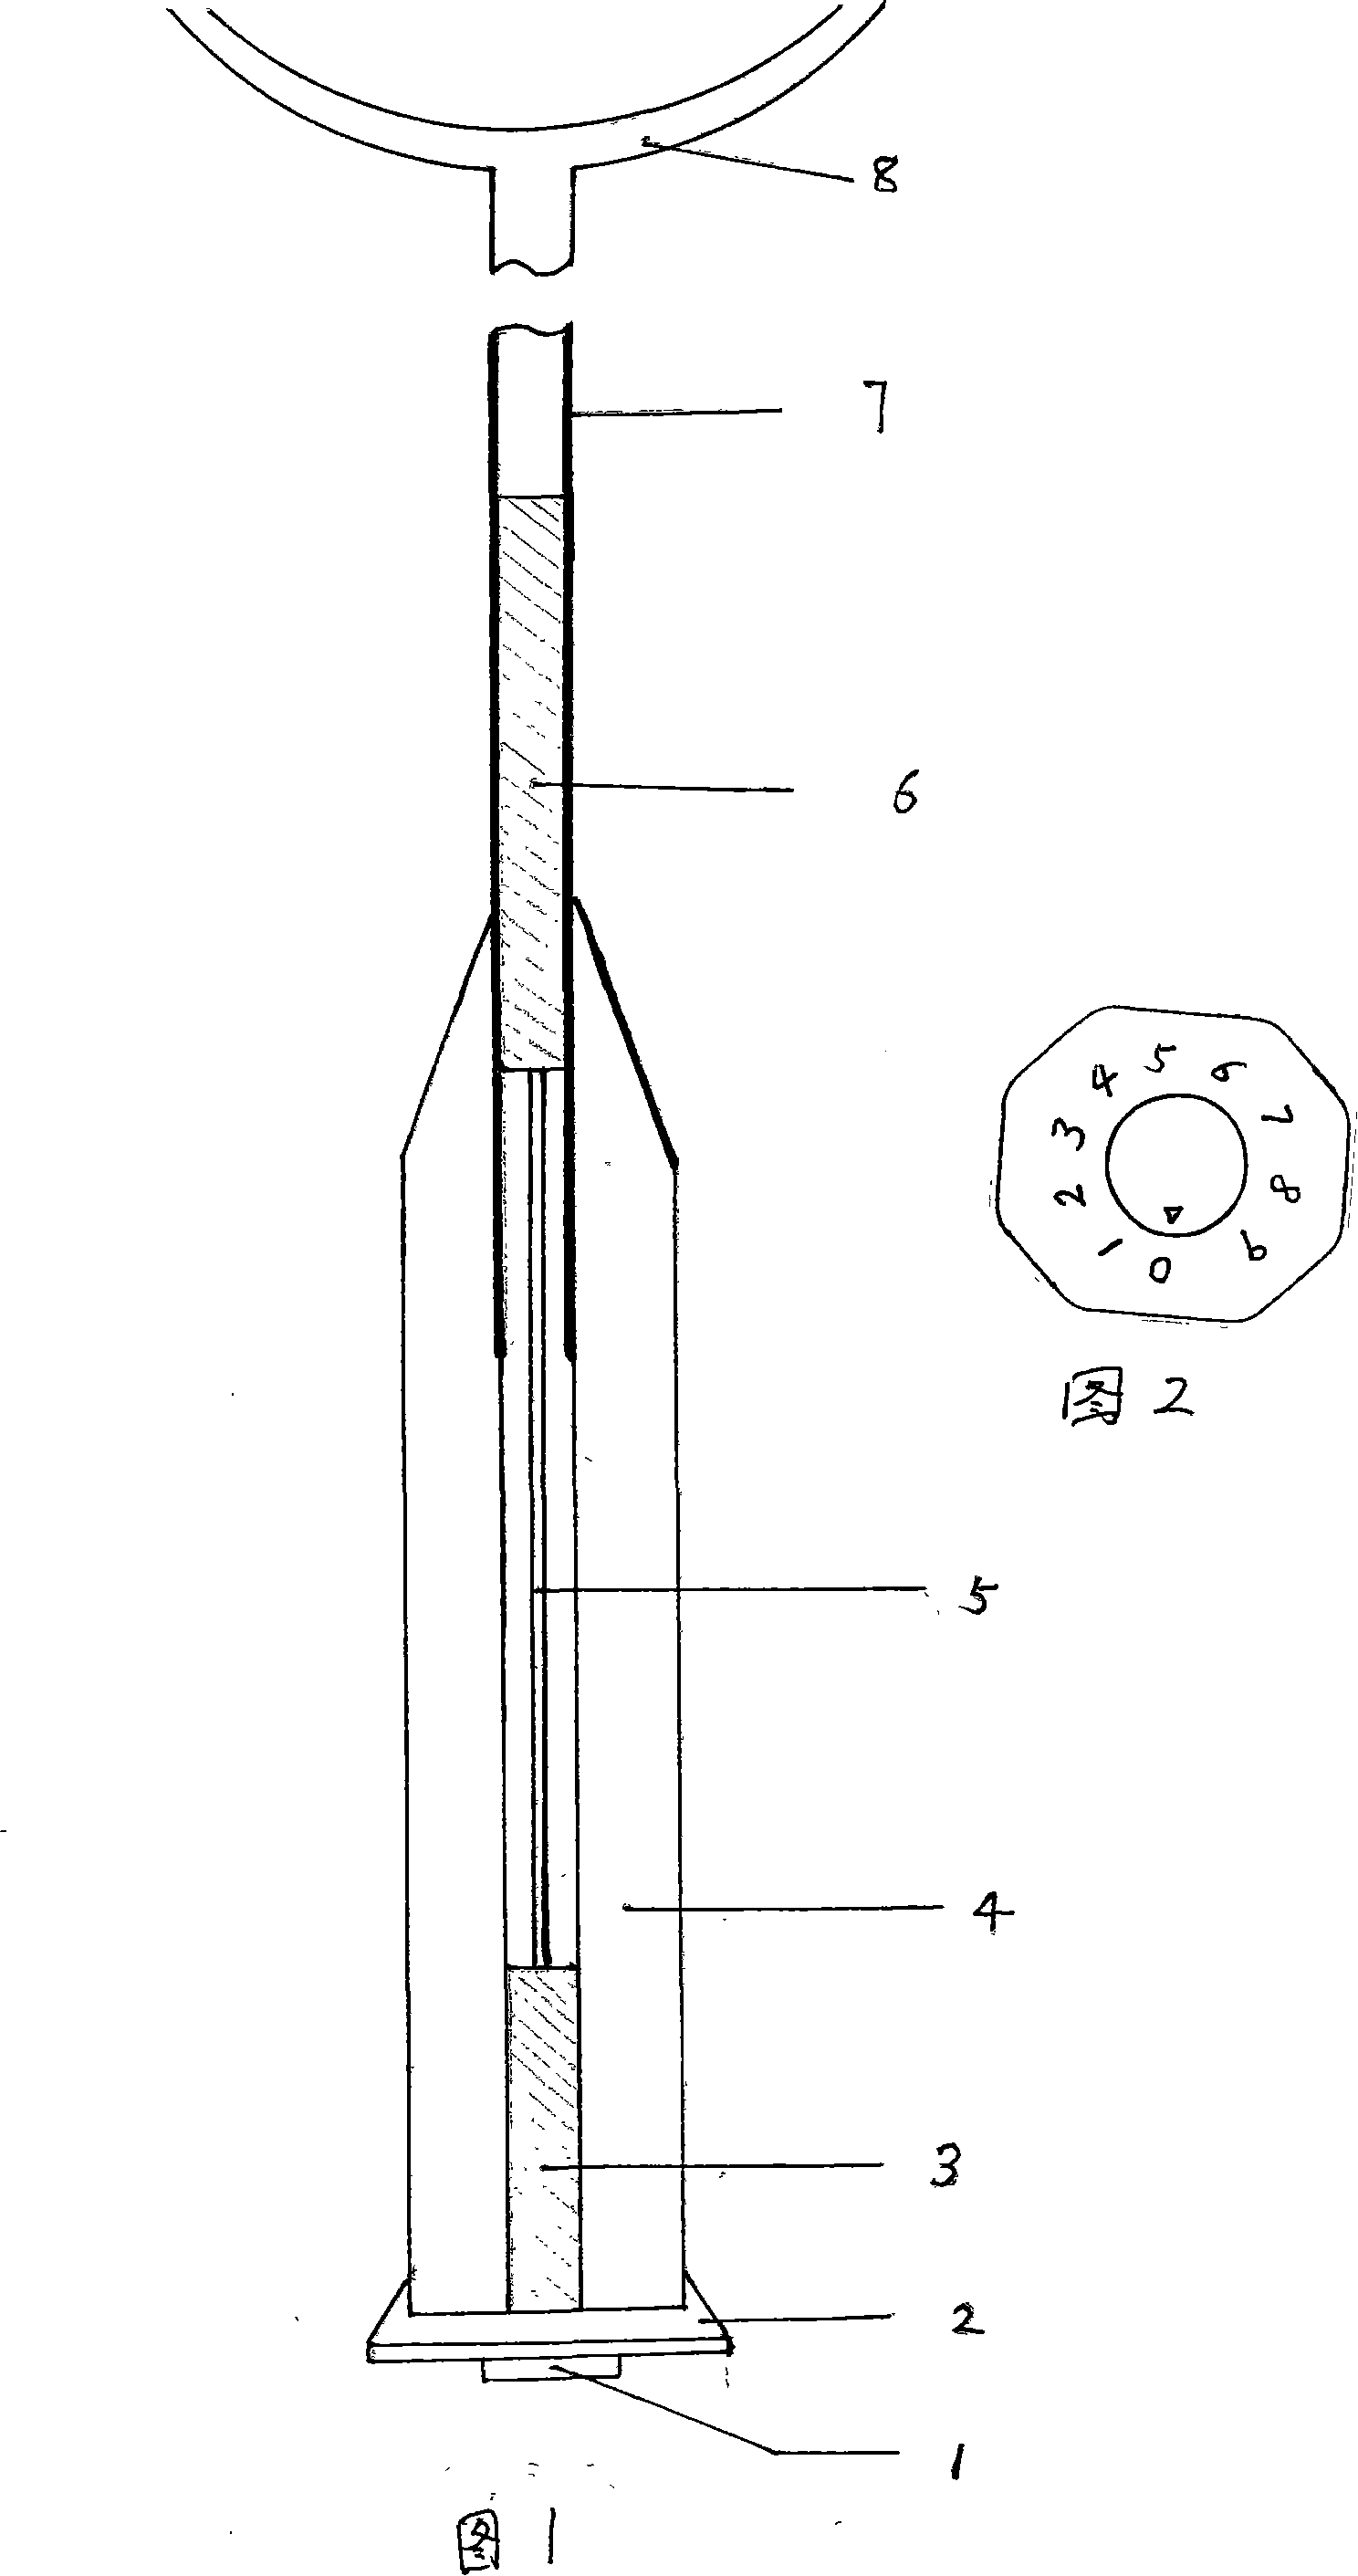 Middle tube springiness point adjustable type battledore